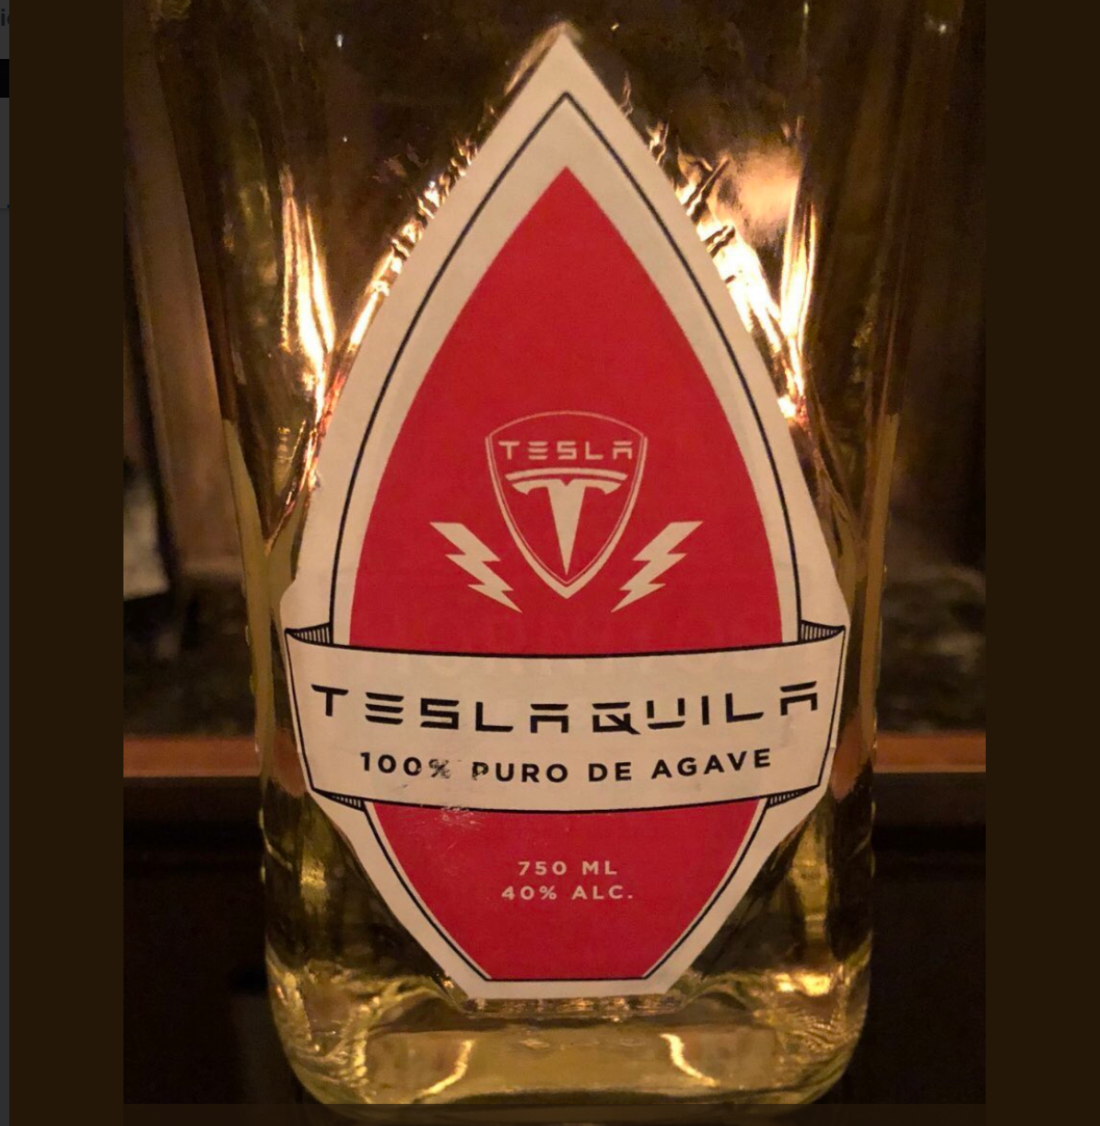 Elon Musk sort un nouveau prodiuit derivé de tesla la Teslaquila